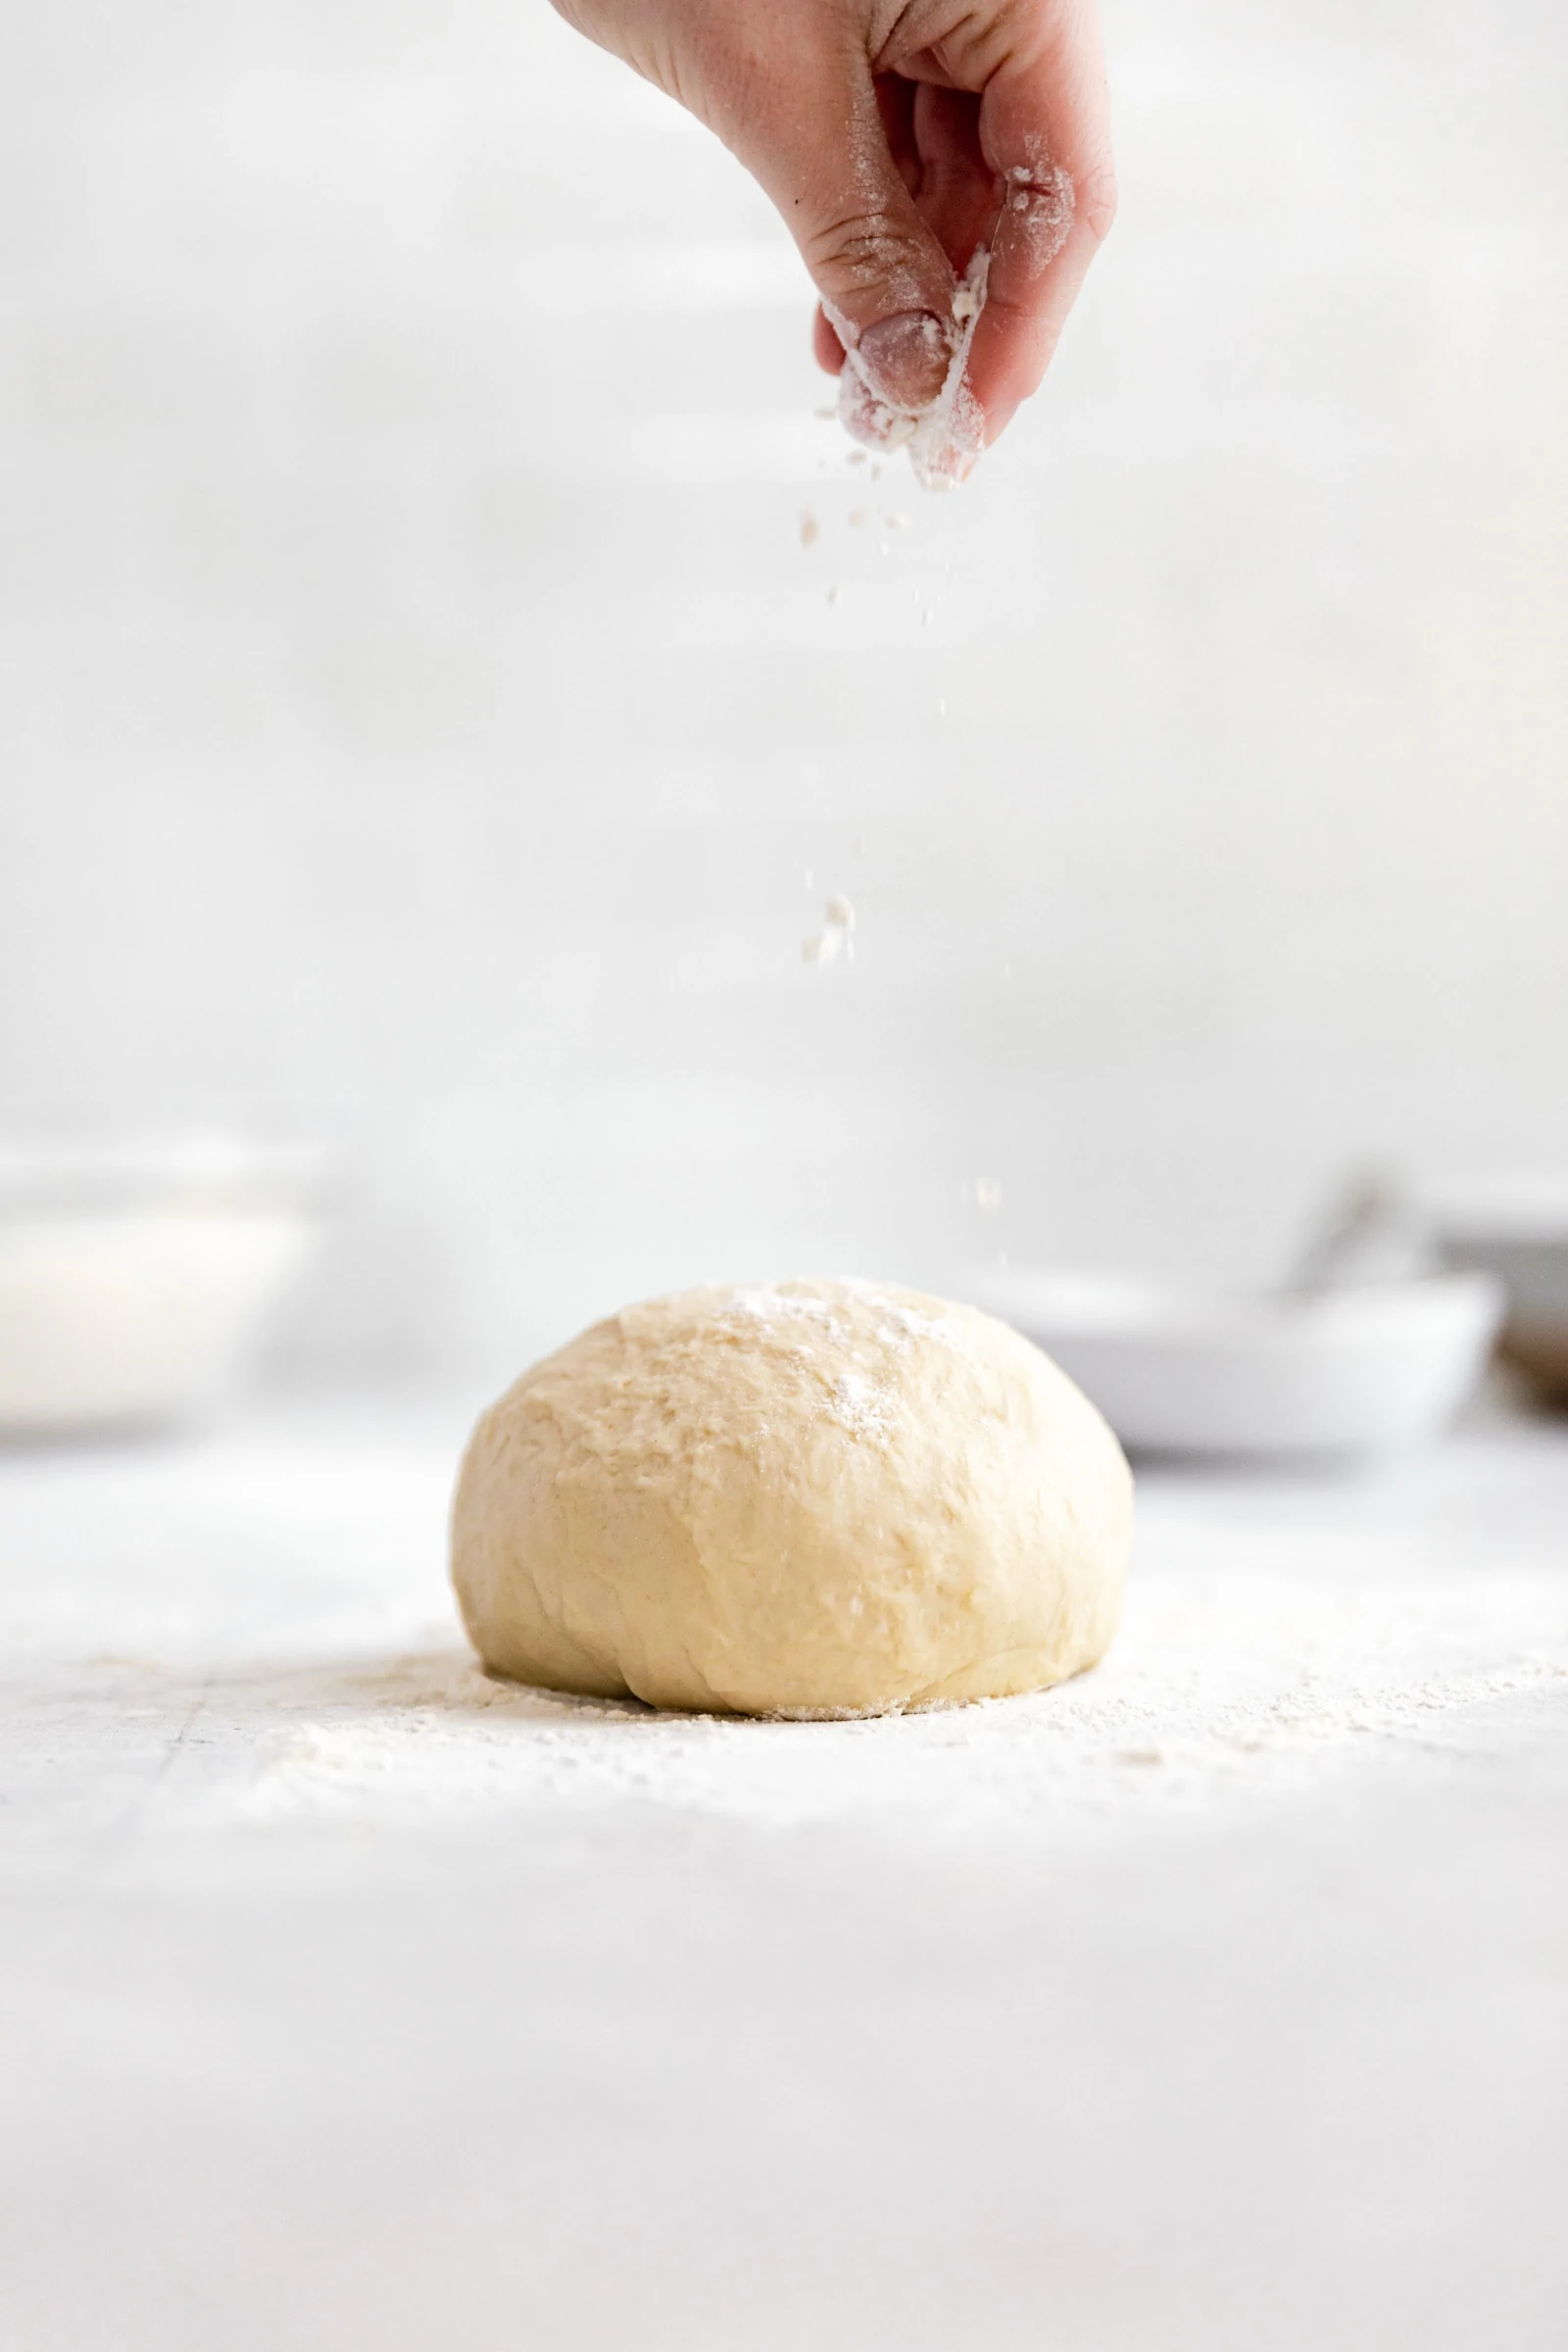 homemade pizza dough ball